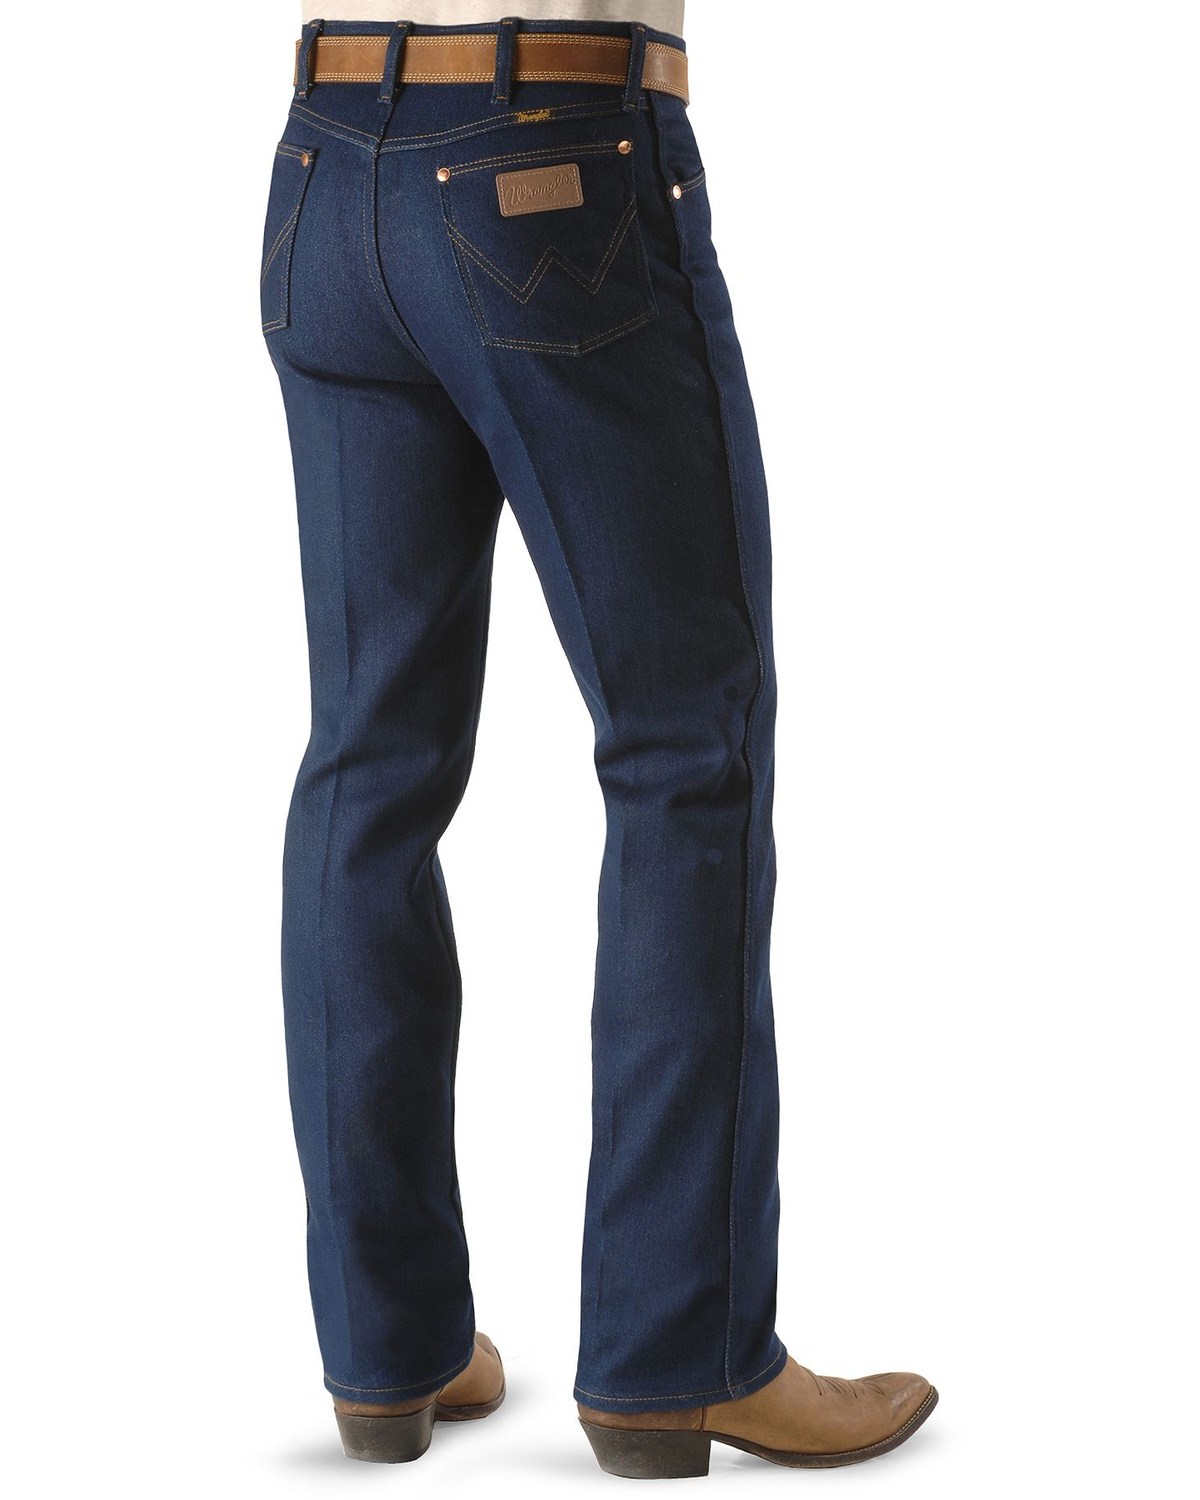 Wrangler Men's Cowboys Cut Stretch Regular Fit Jeans